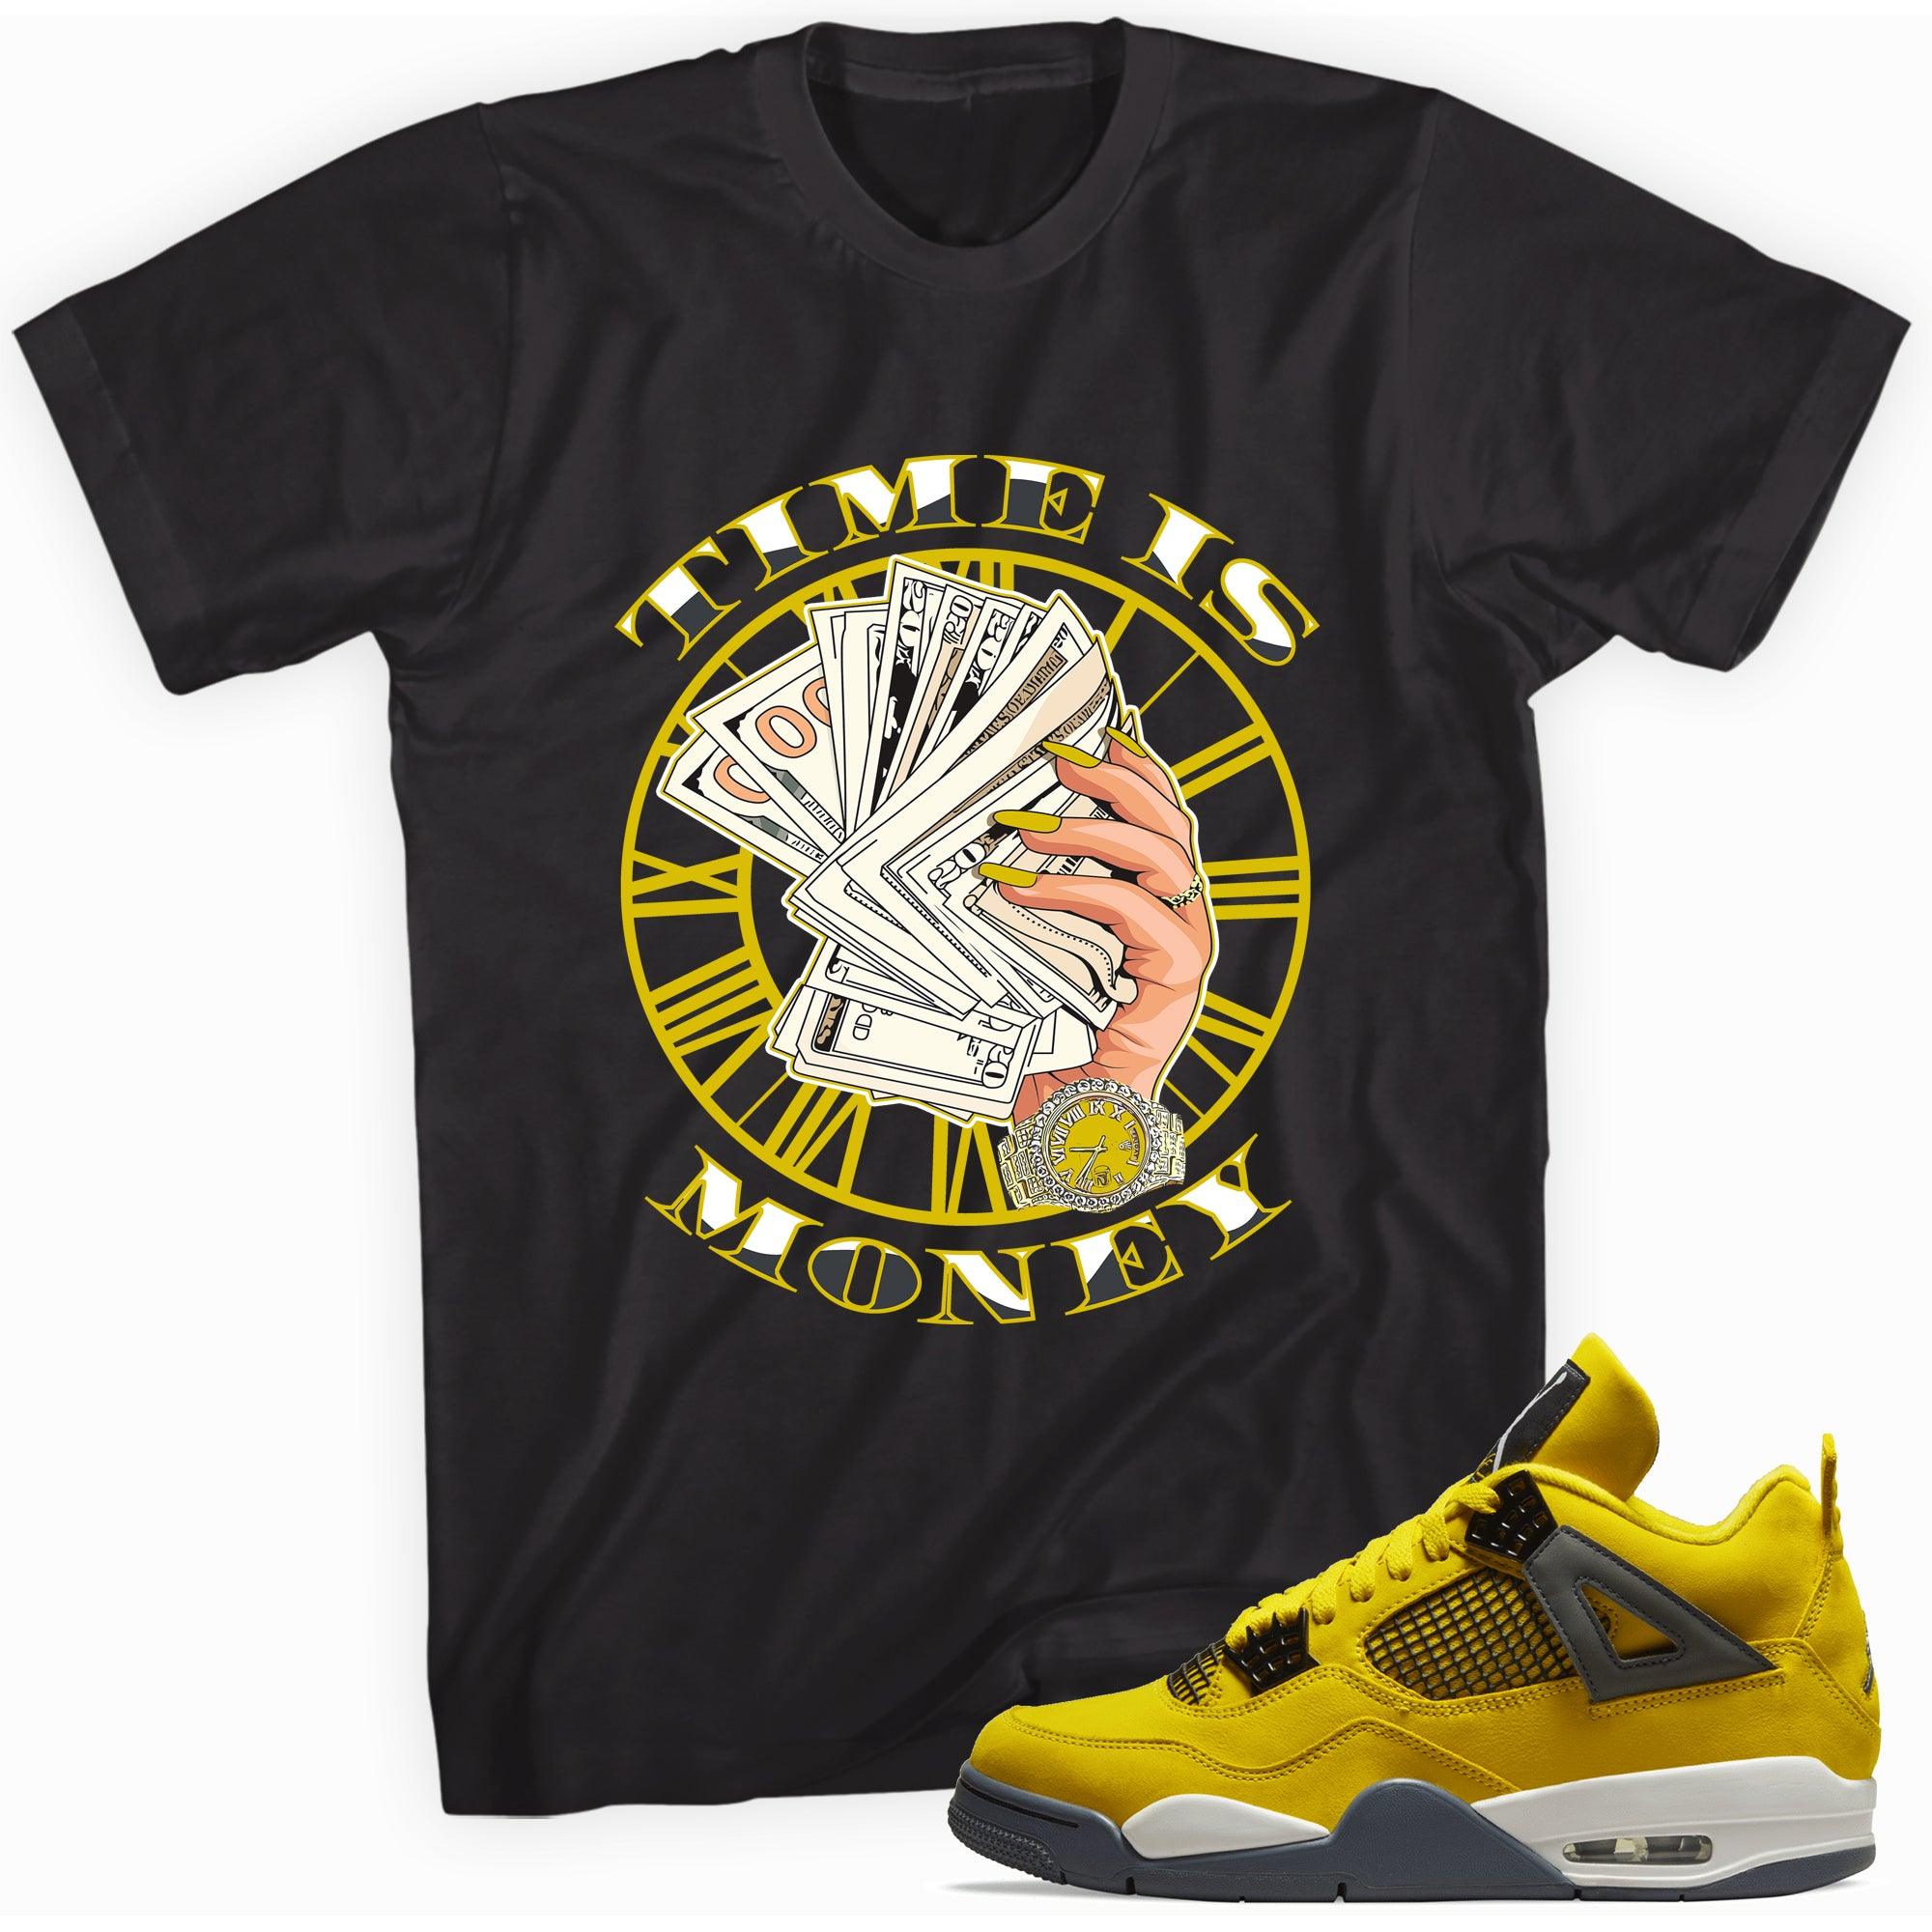 Black Time Is Money Shirt Air Jordan 4s Retro Lightning photo